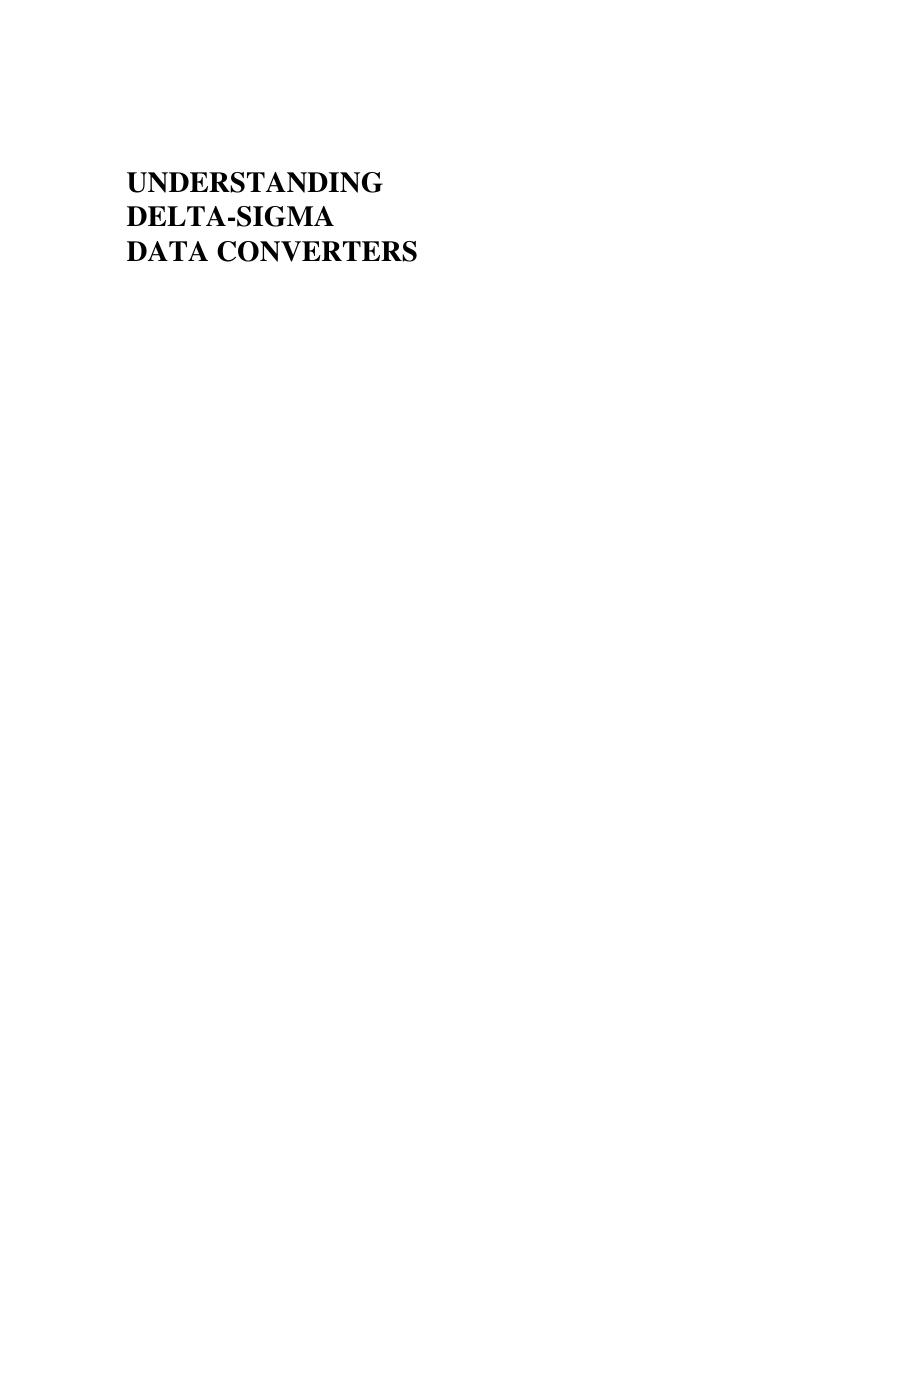 Understanding Delta-Sigma Data Converters 2nd edition